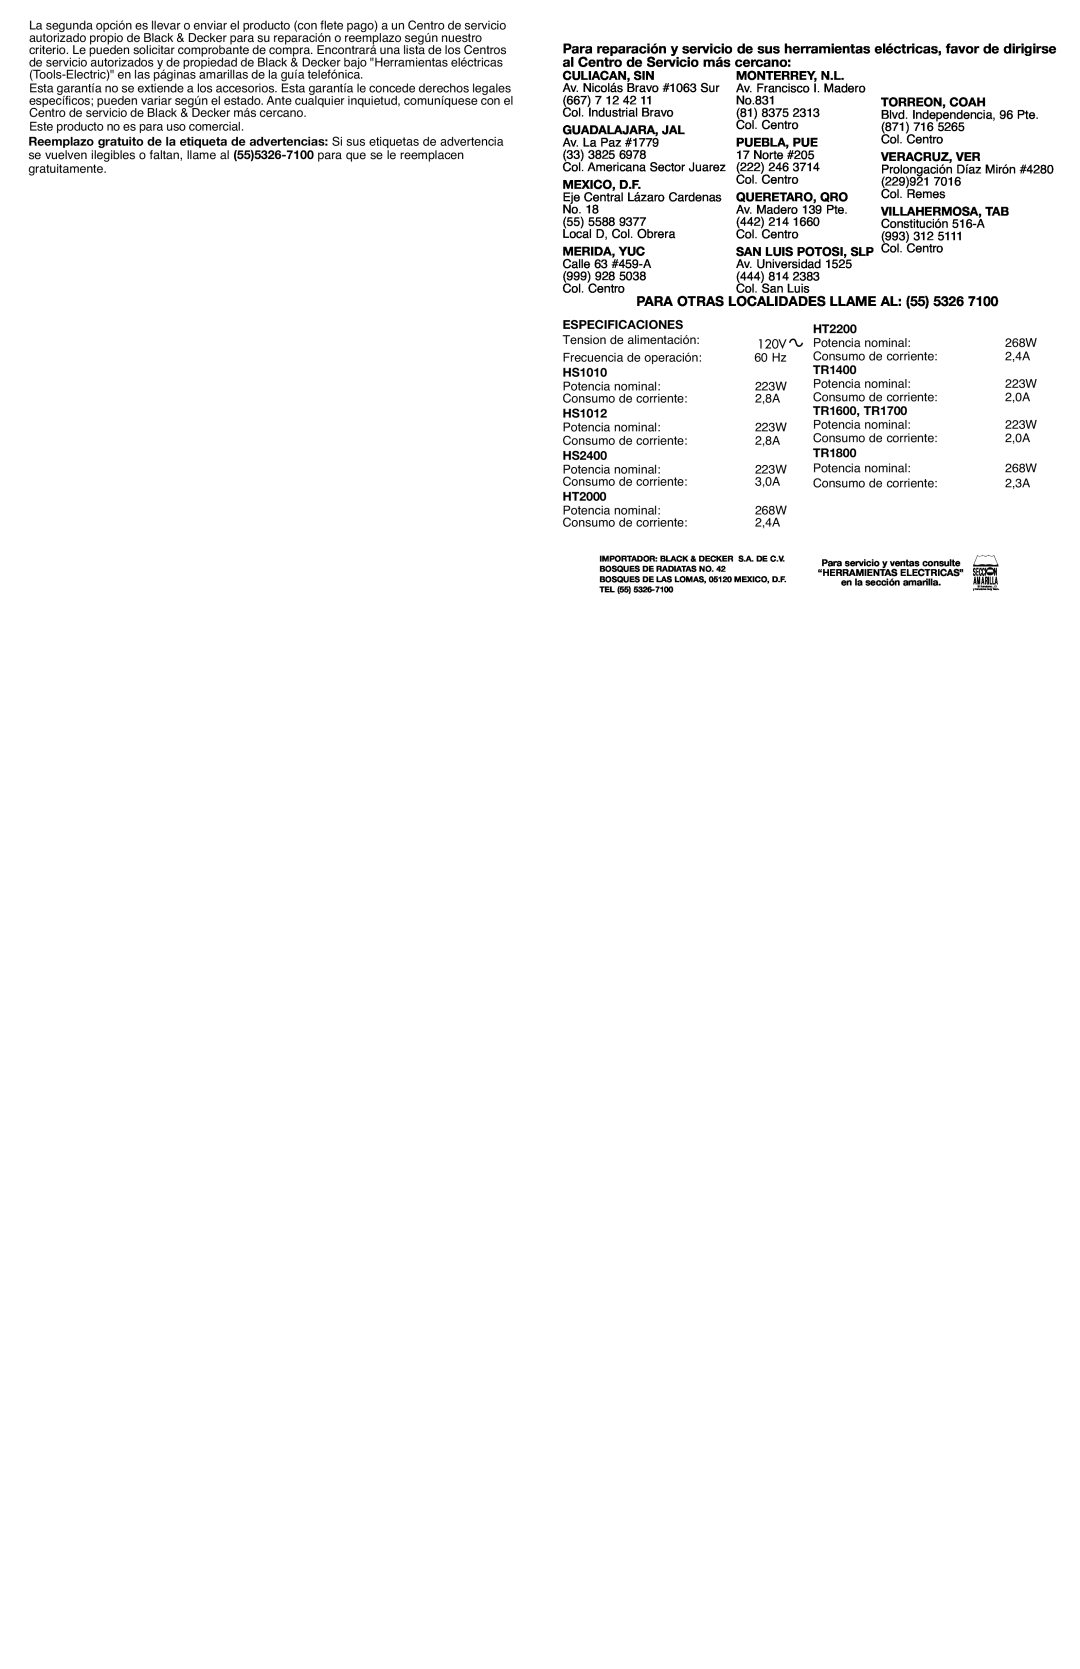 Black & Decker TR180, HS1010, TR1600, 40367-00 instruction manual PARA OTRAS LOCALIDADES LLAME AL 55 